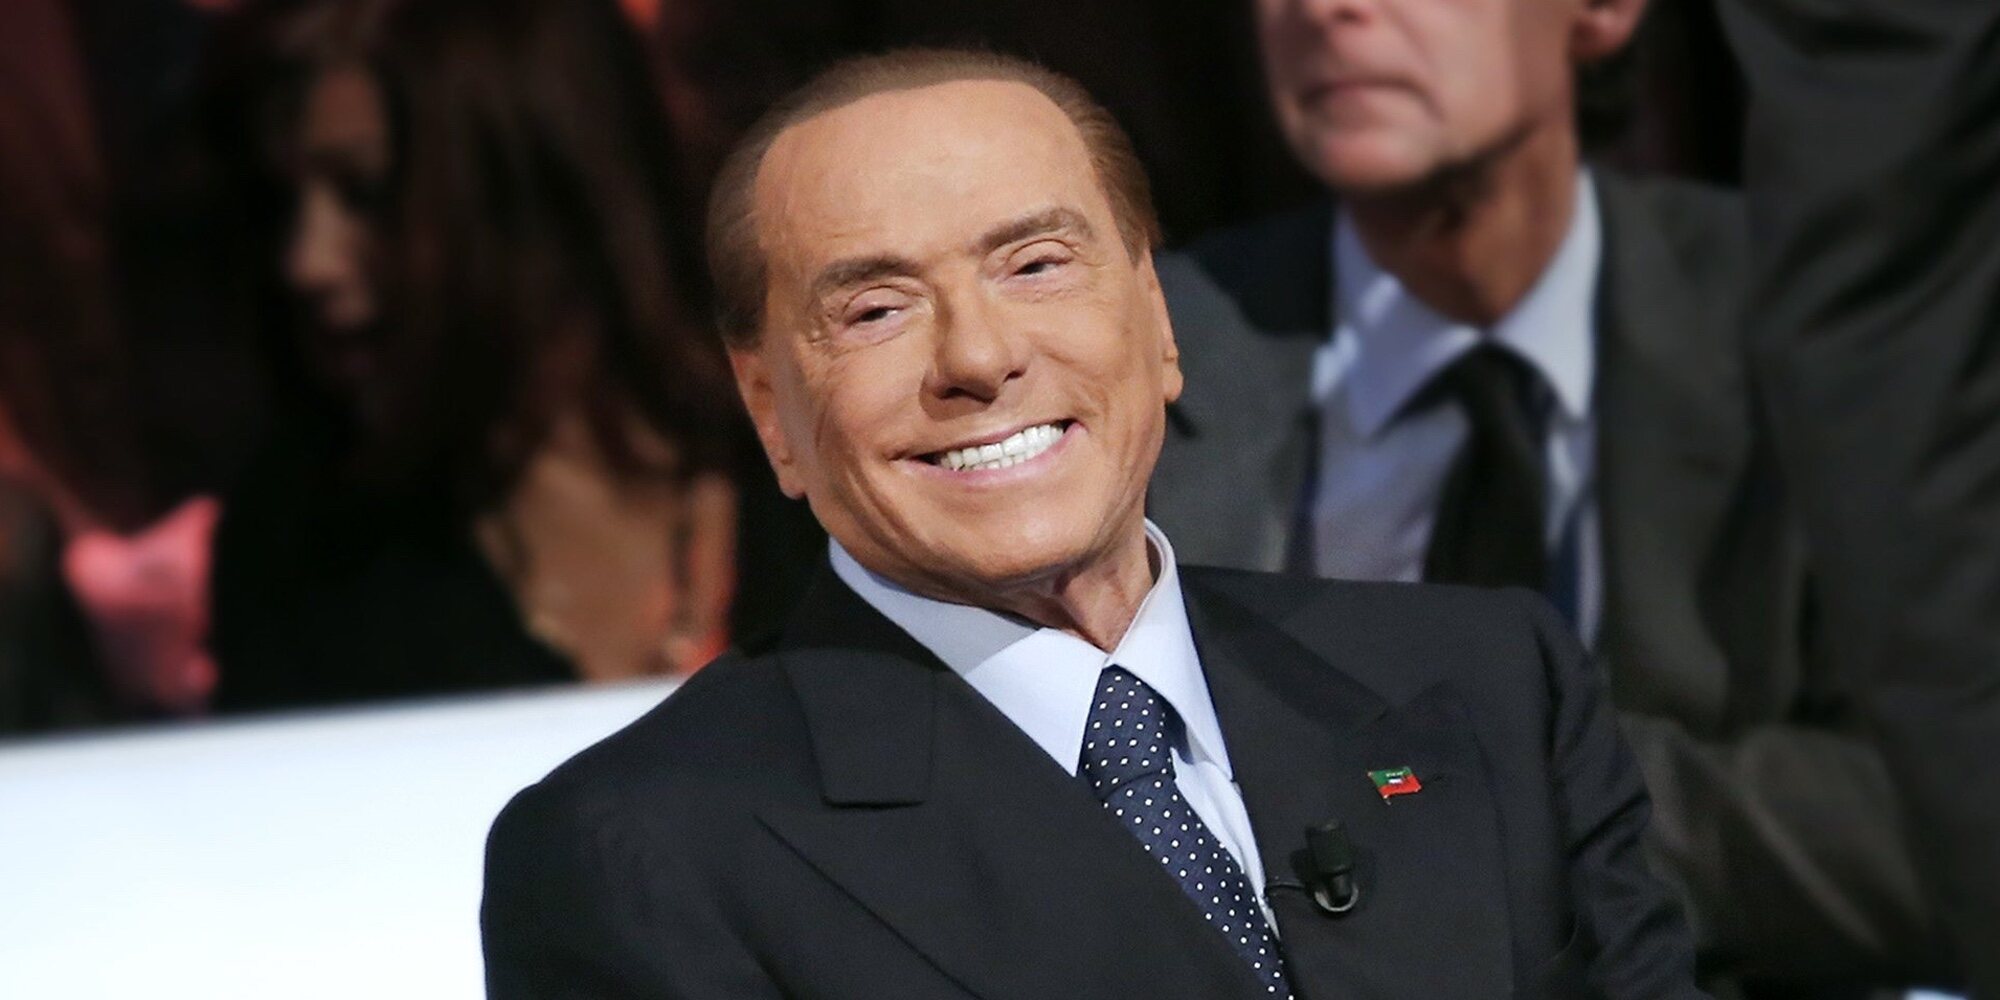 Silvio Berlusconi celebra una boda simbólica con Marta Fascina